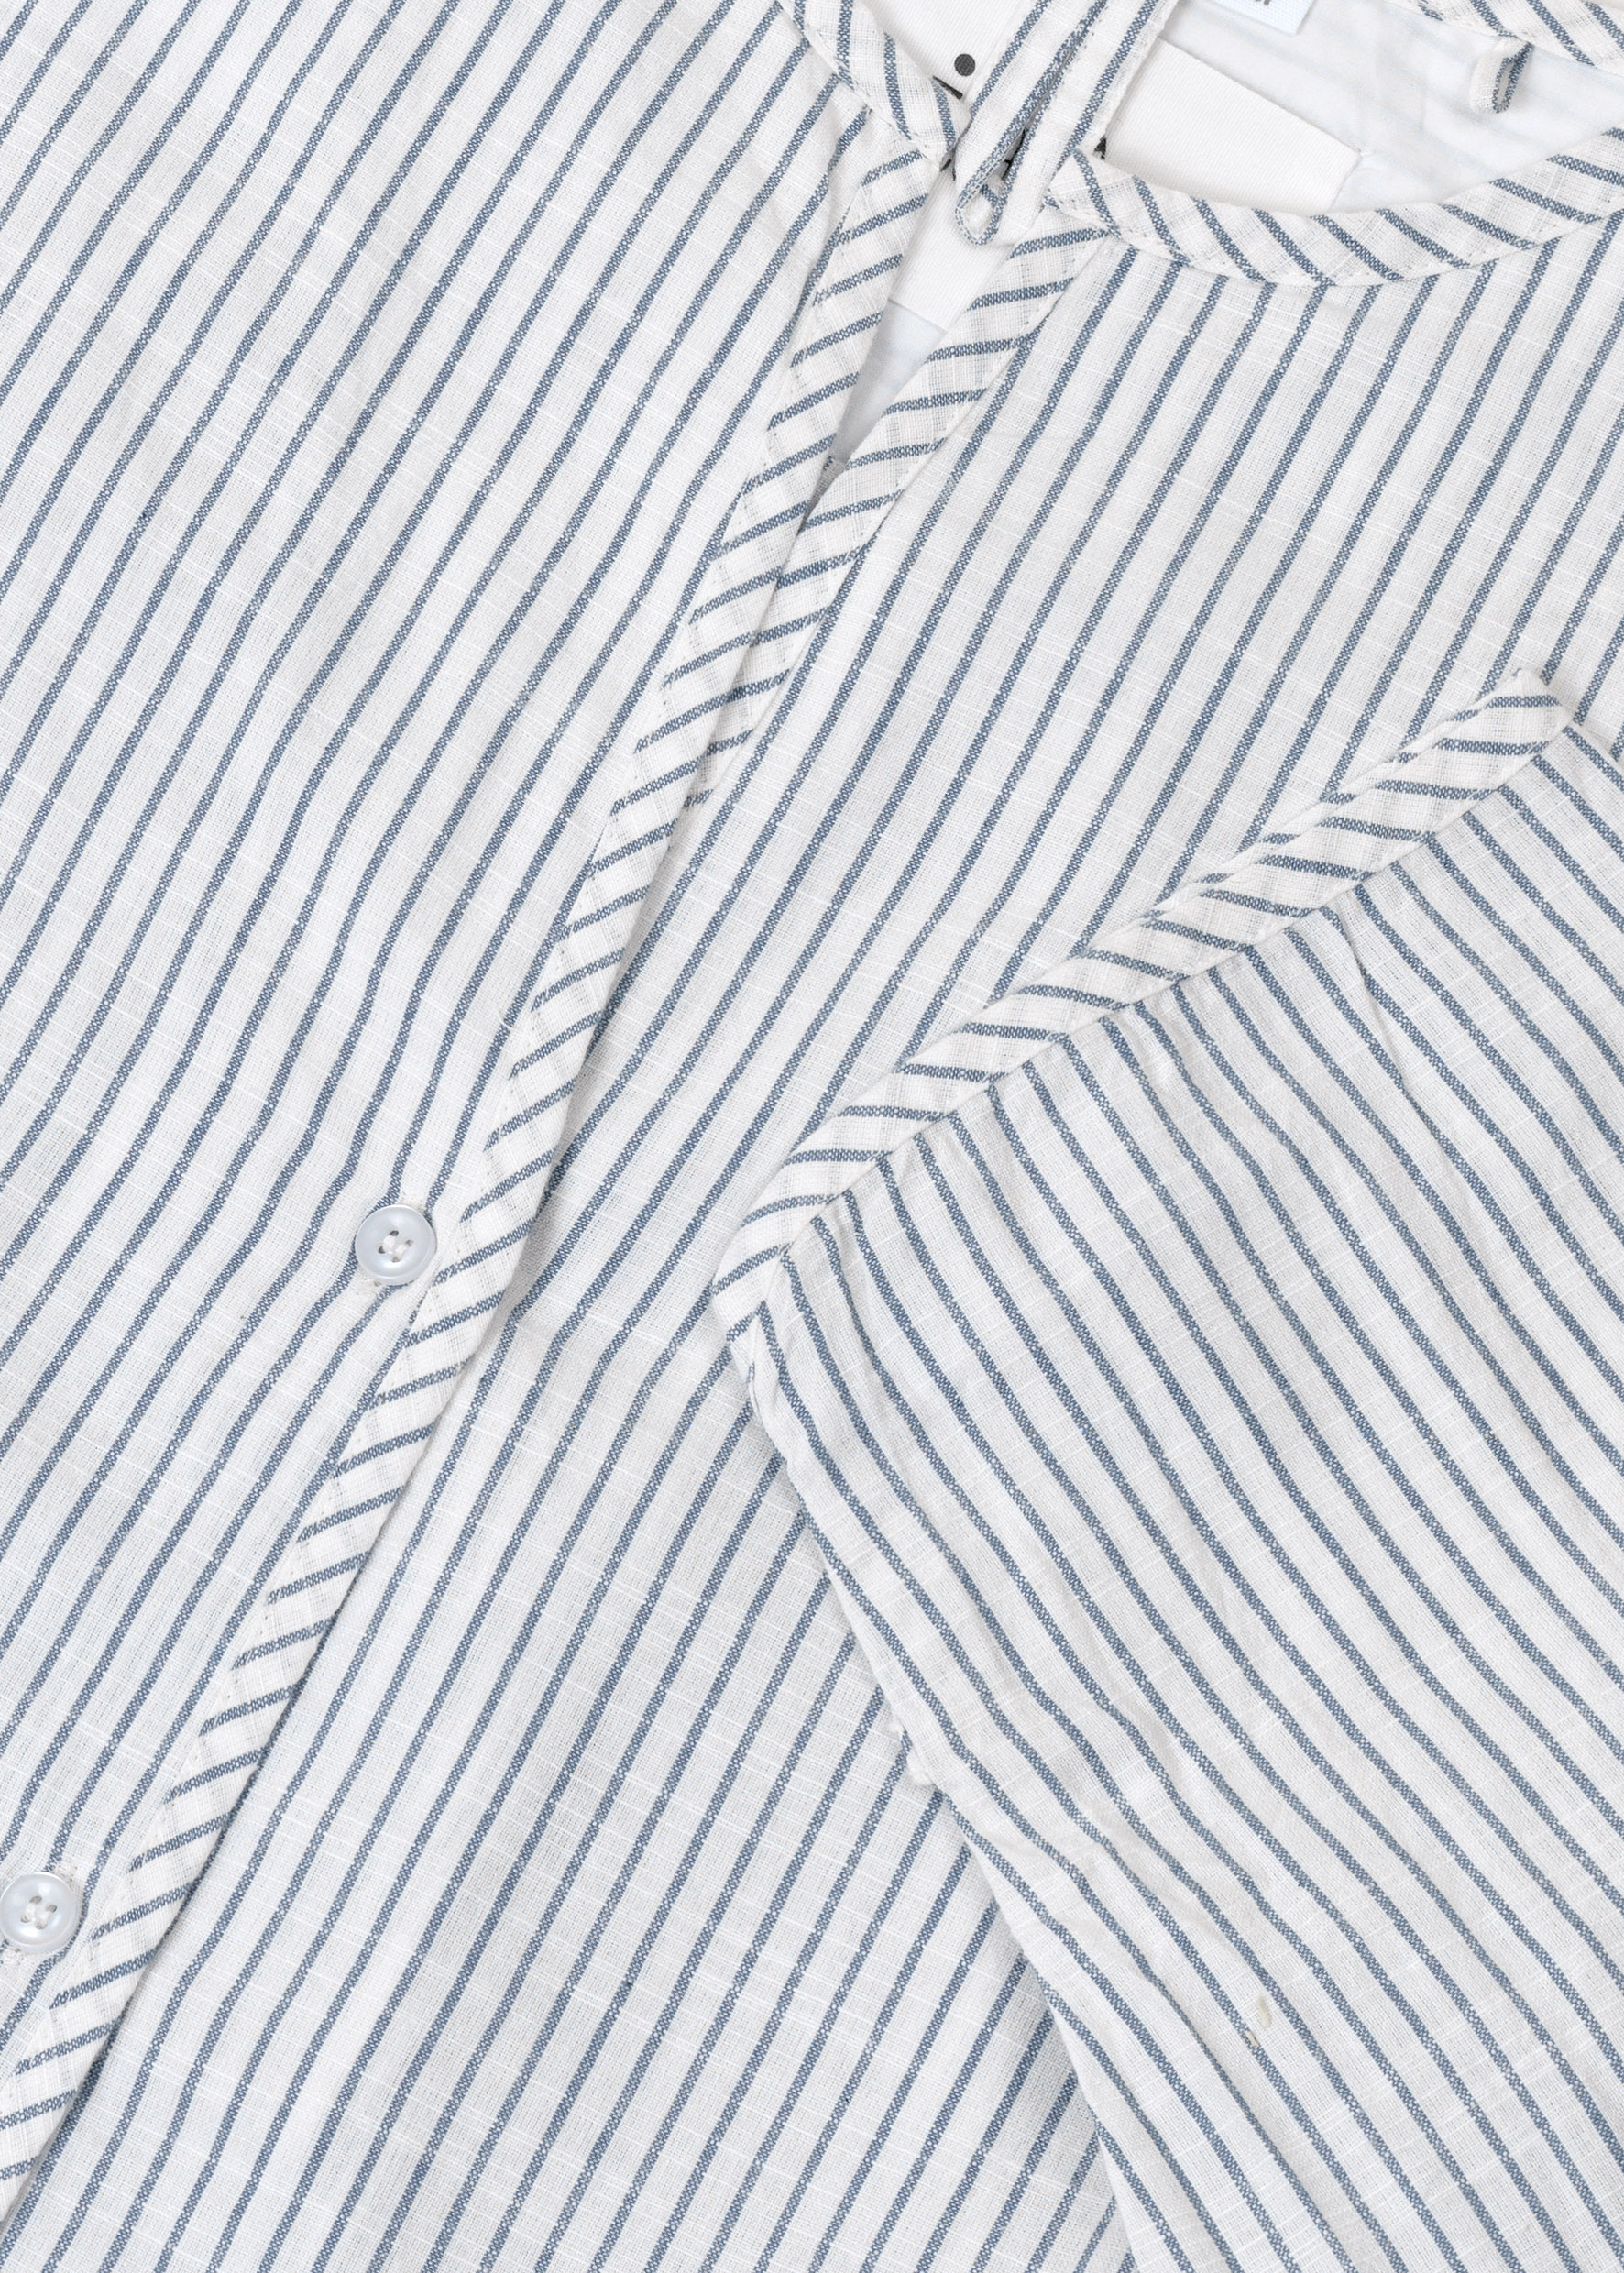 Sleepwear - Pyjamas Striped Thumbnail